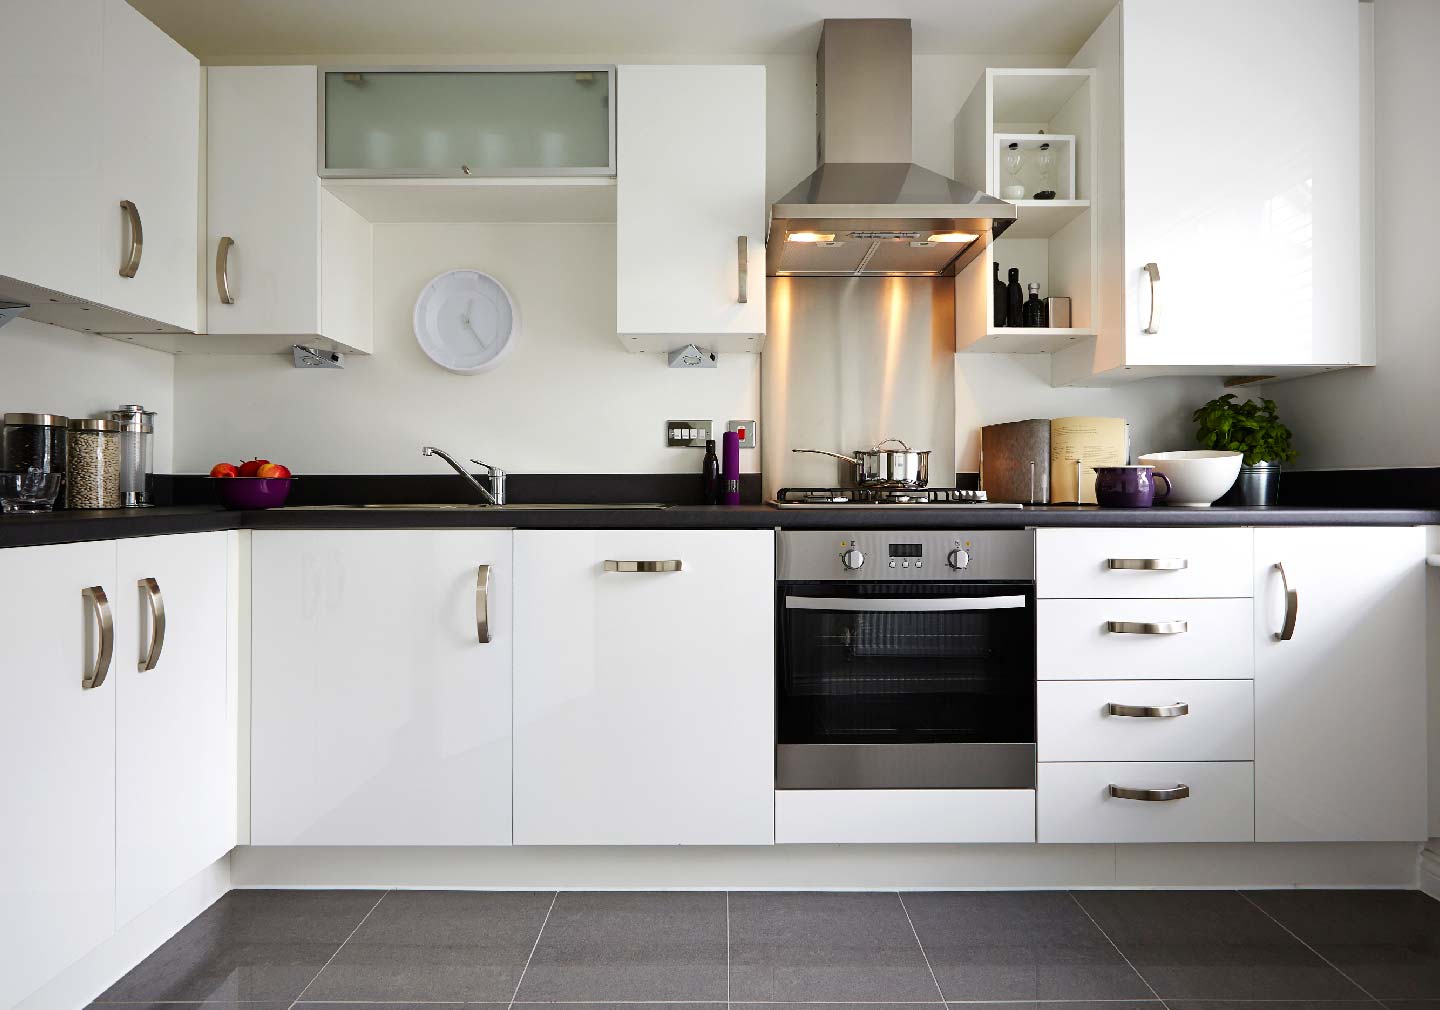 Opt good lighting for kitchen interior designs